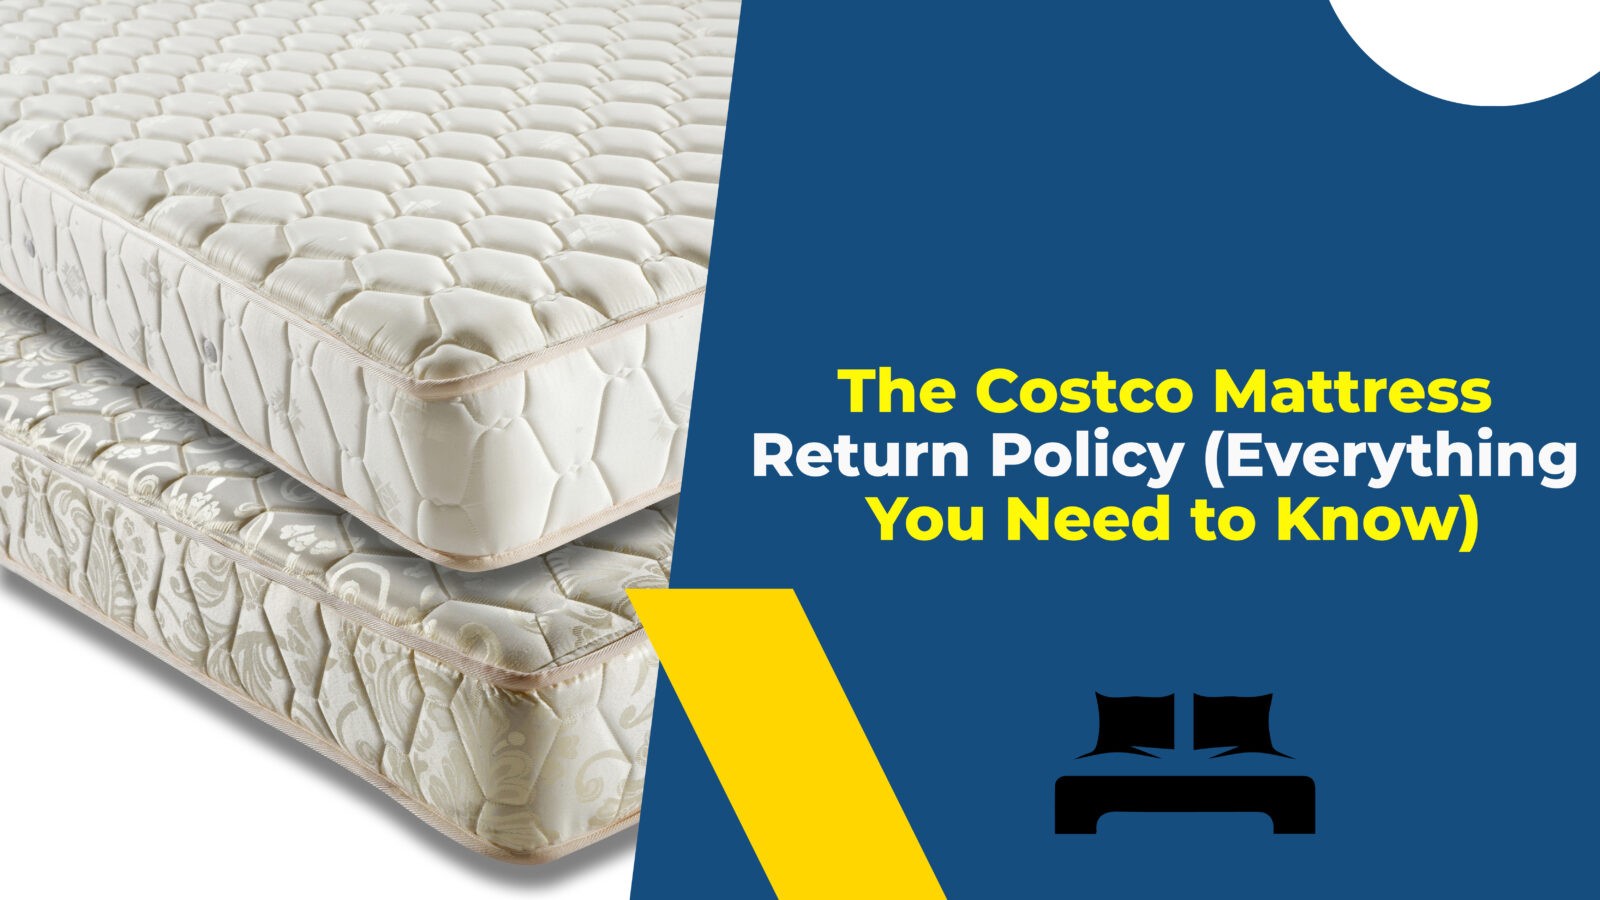 reverie mattress costco sales event in calif